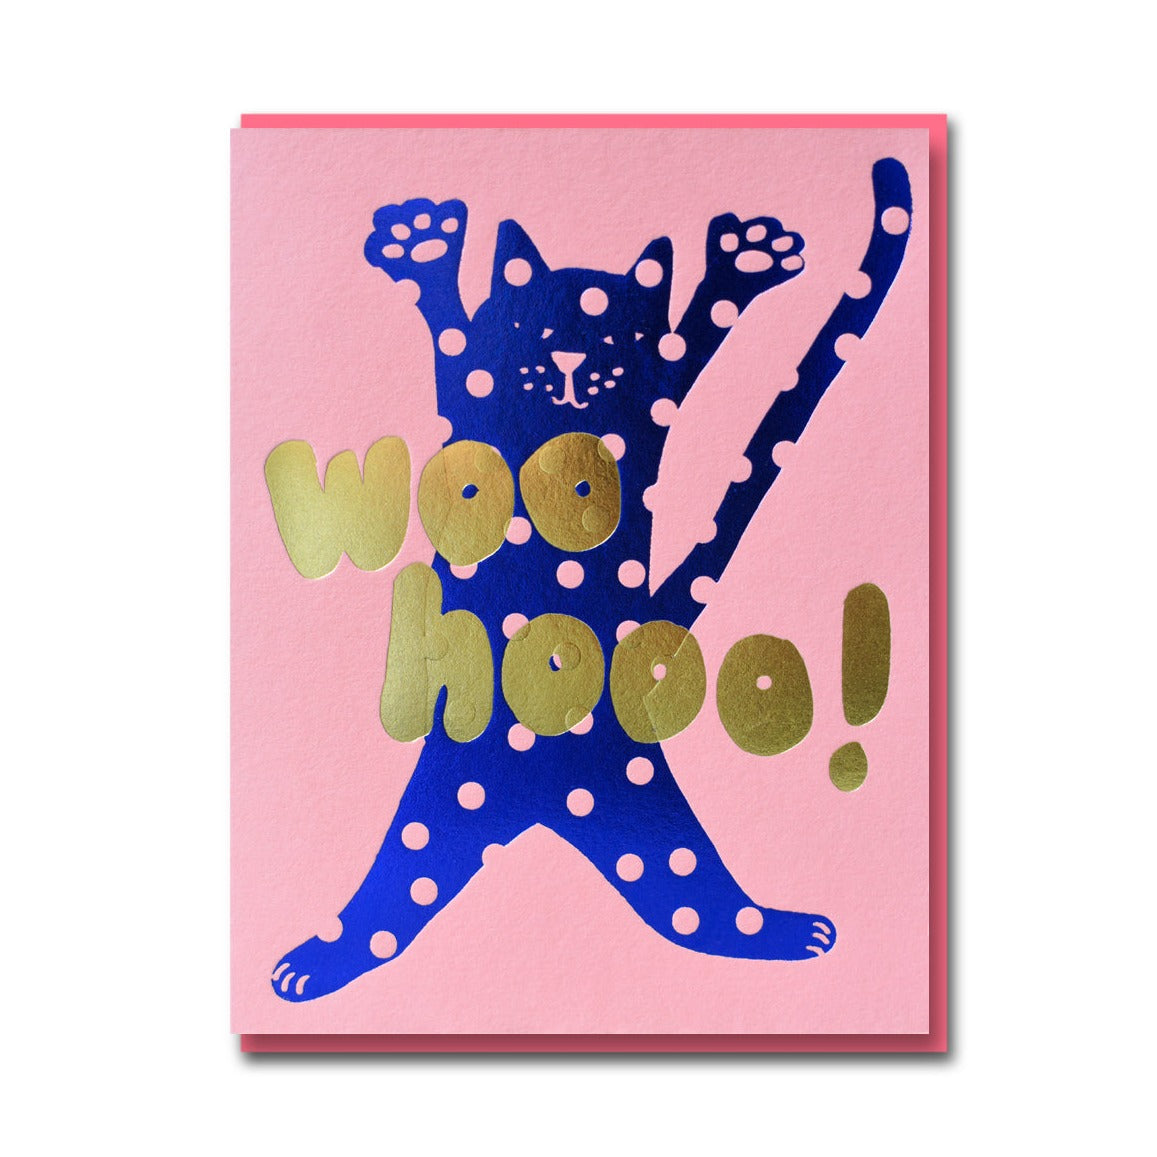 Joyful Spotty Cat Greeting Card